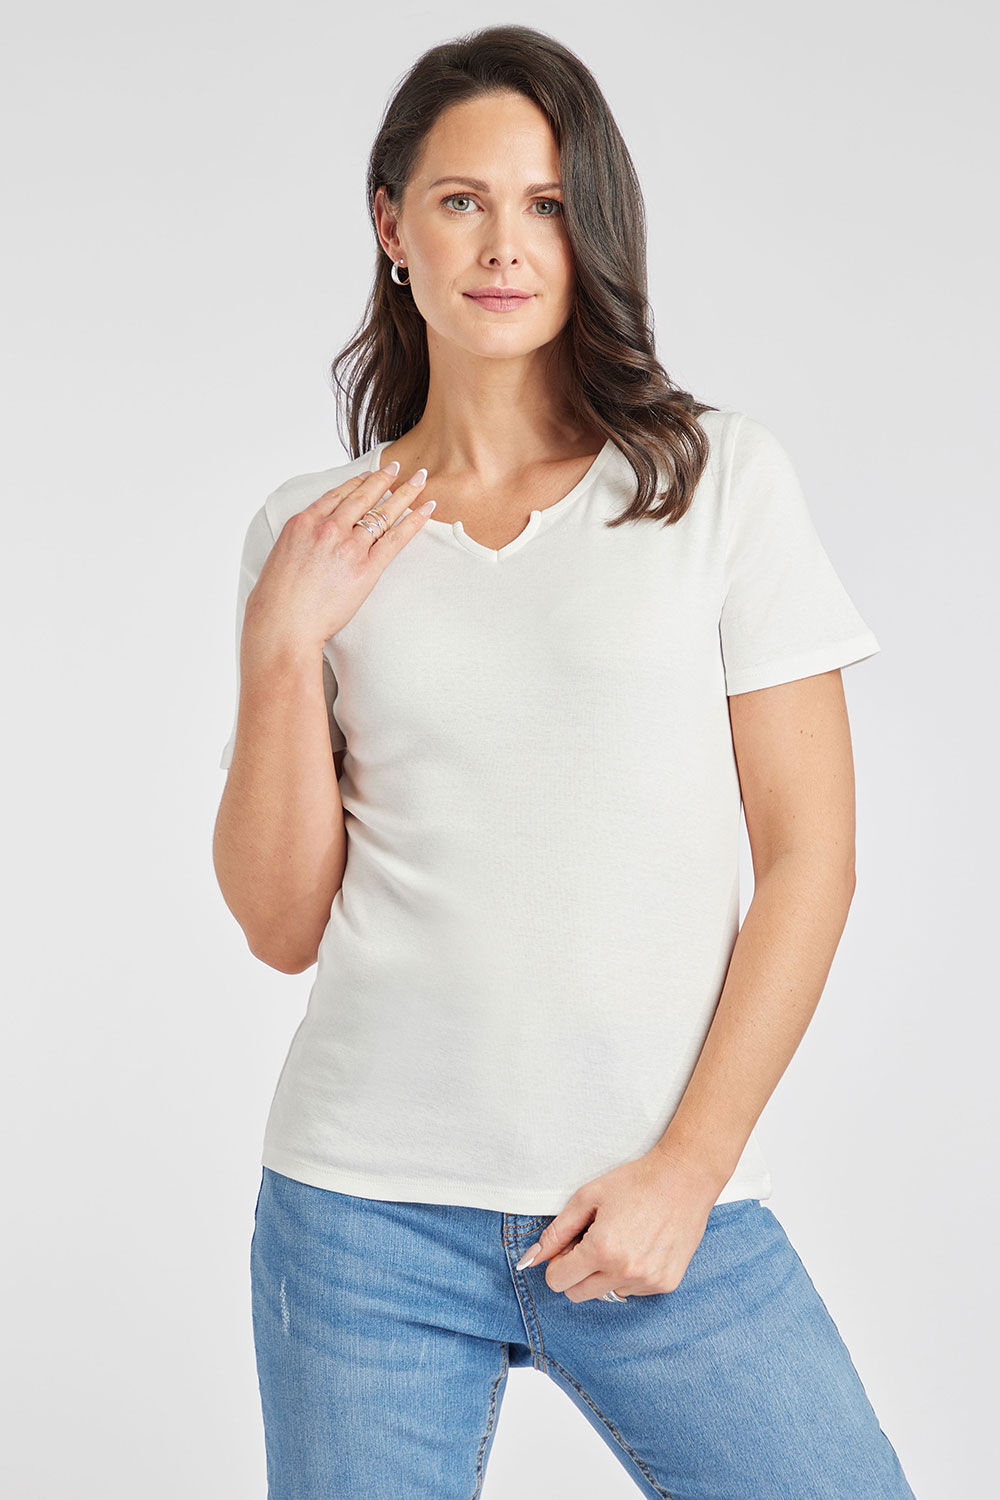 Bonmarche Ivory Short Sleeve Notch Plain T-Shirt, Size: 14